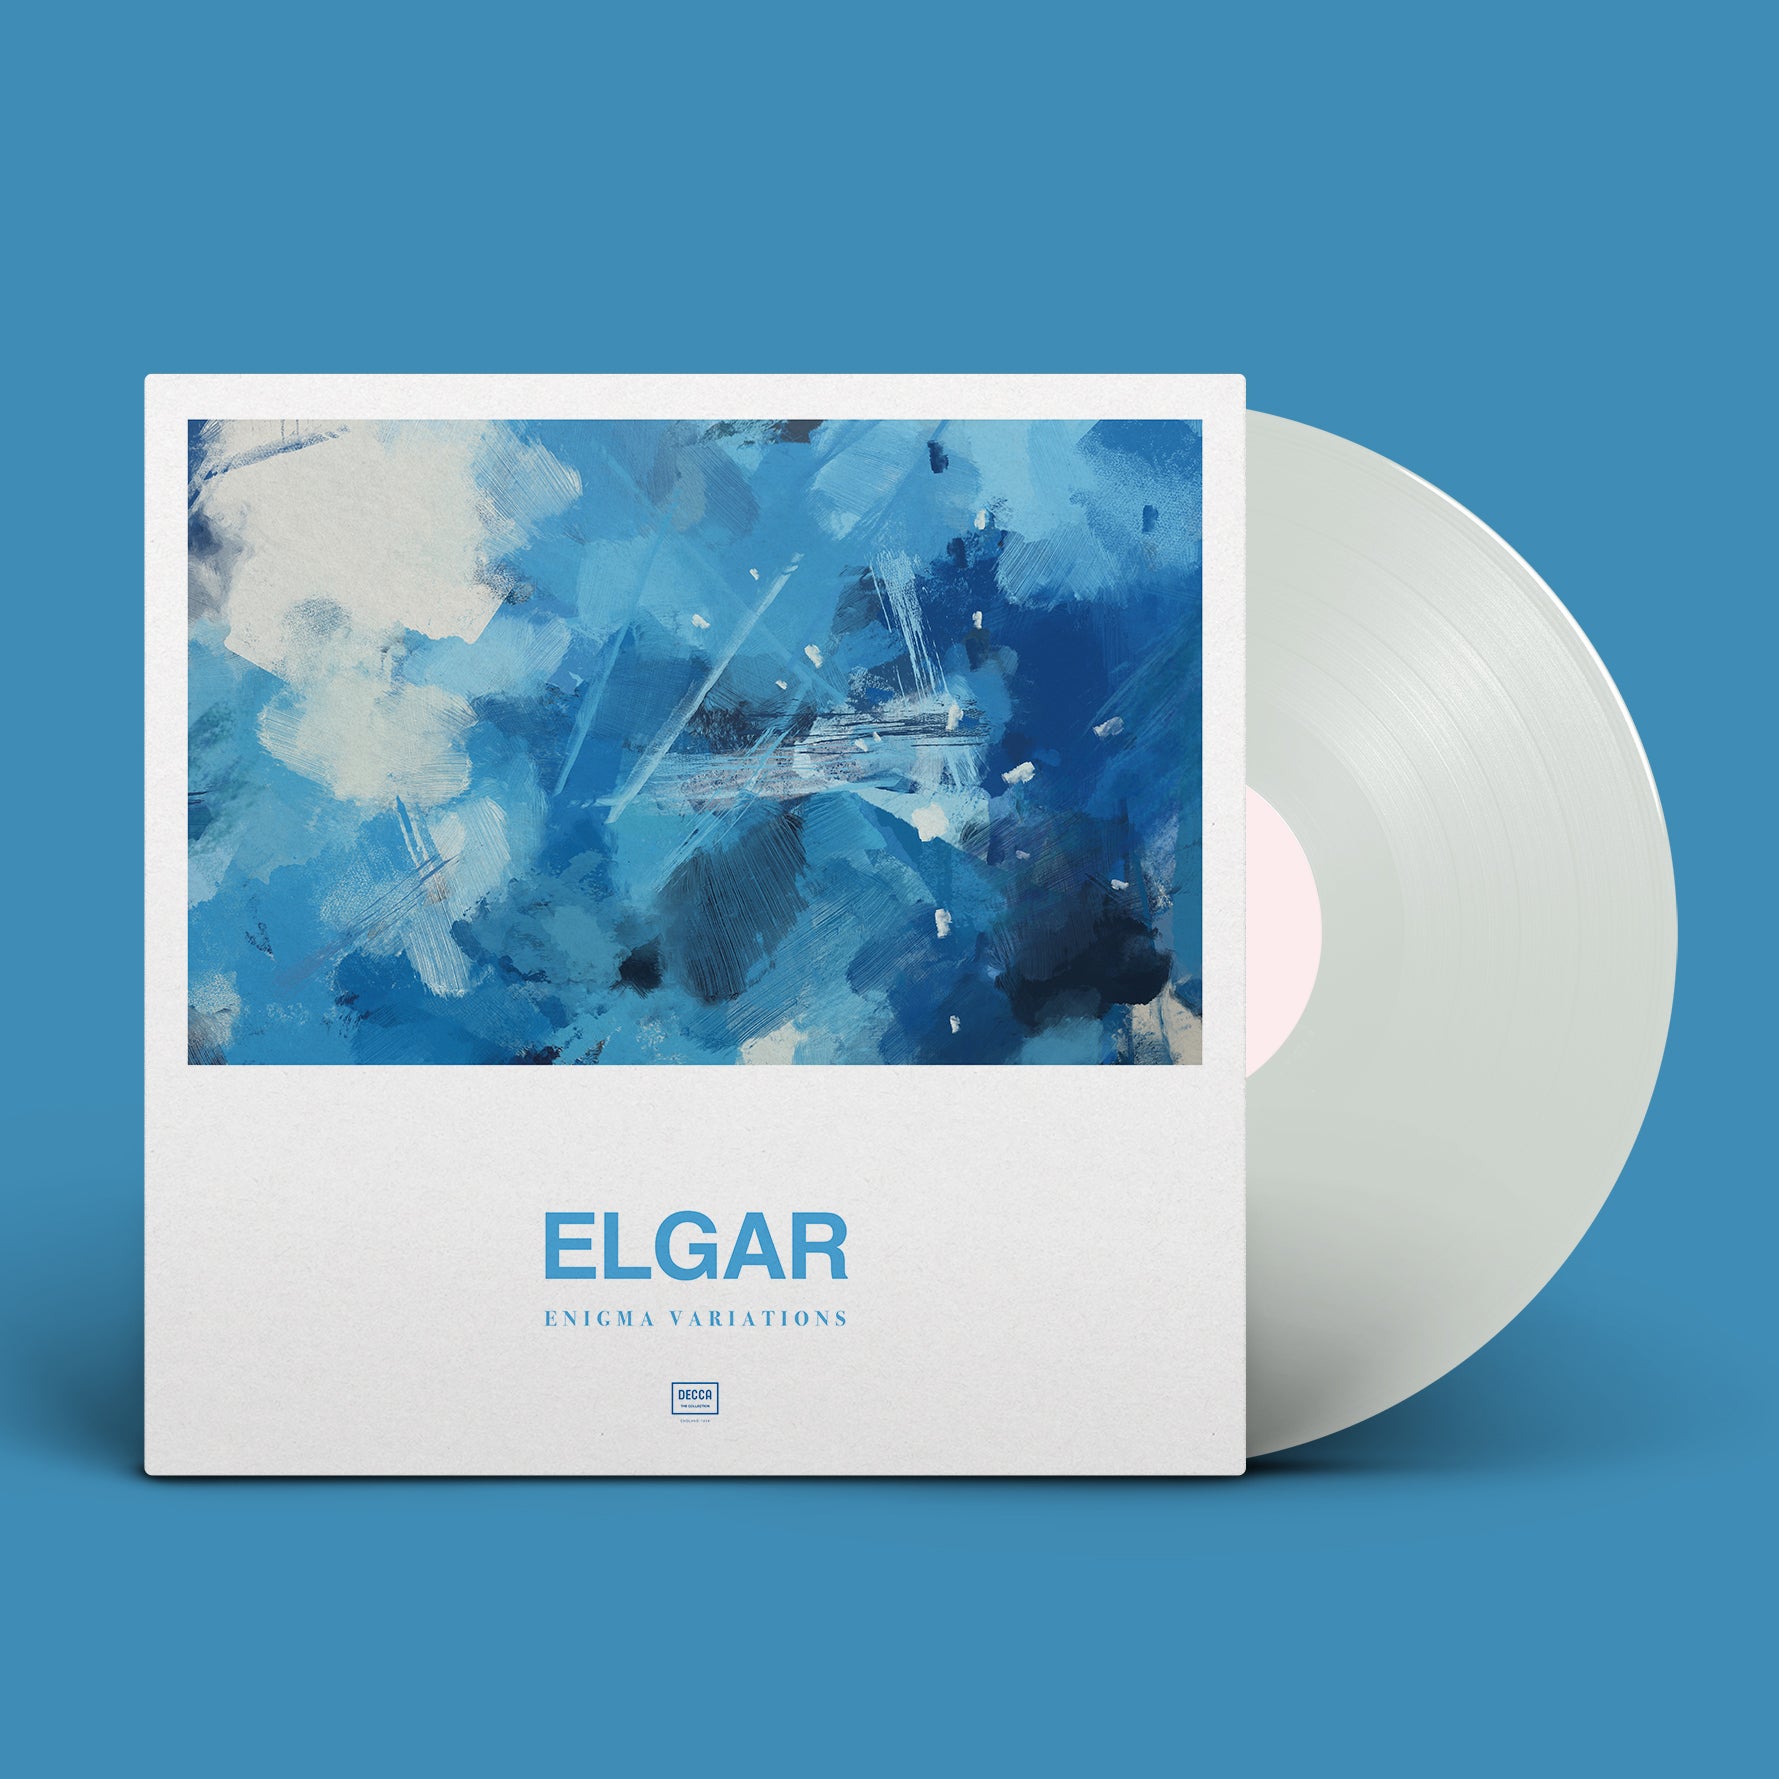 Edward Elgar - Elgar - Enigma Variations (Decca - The Collection): Vinyl LP